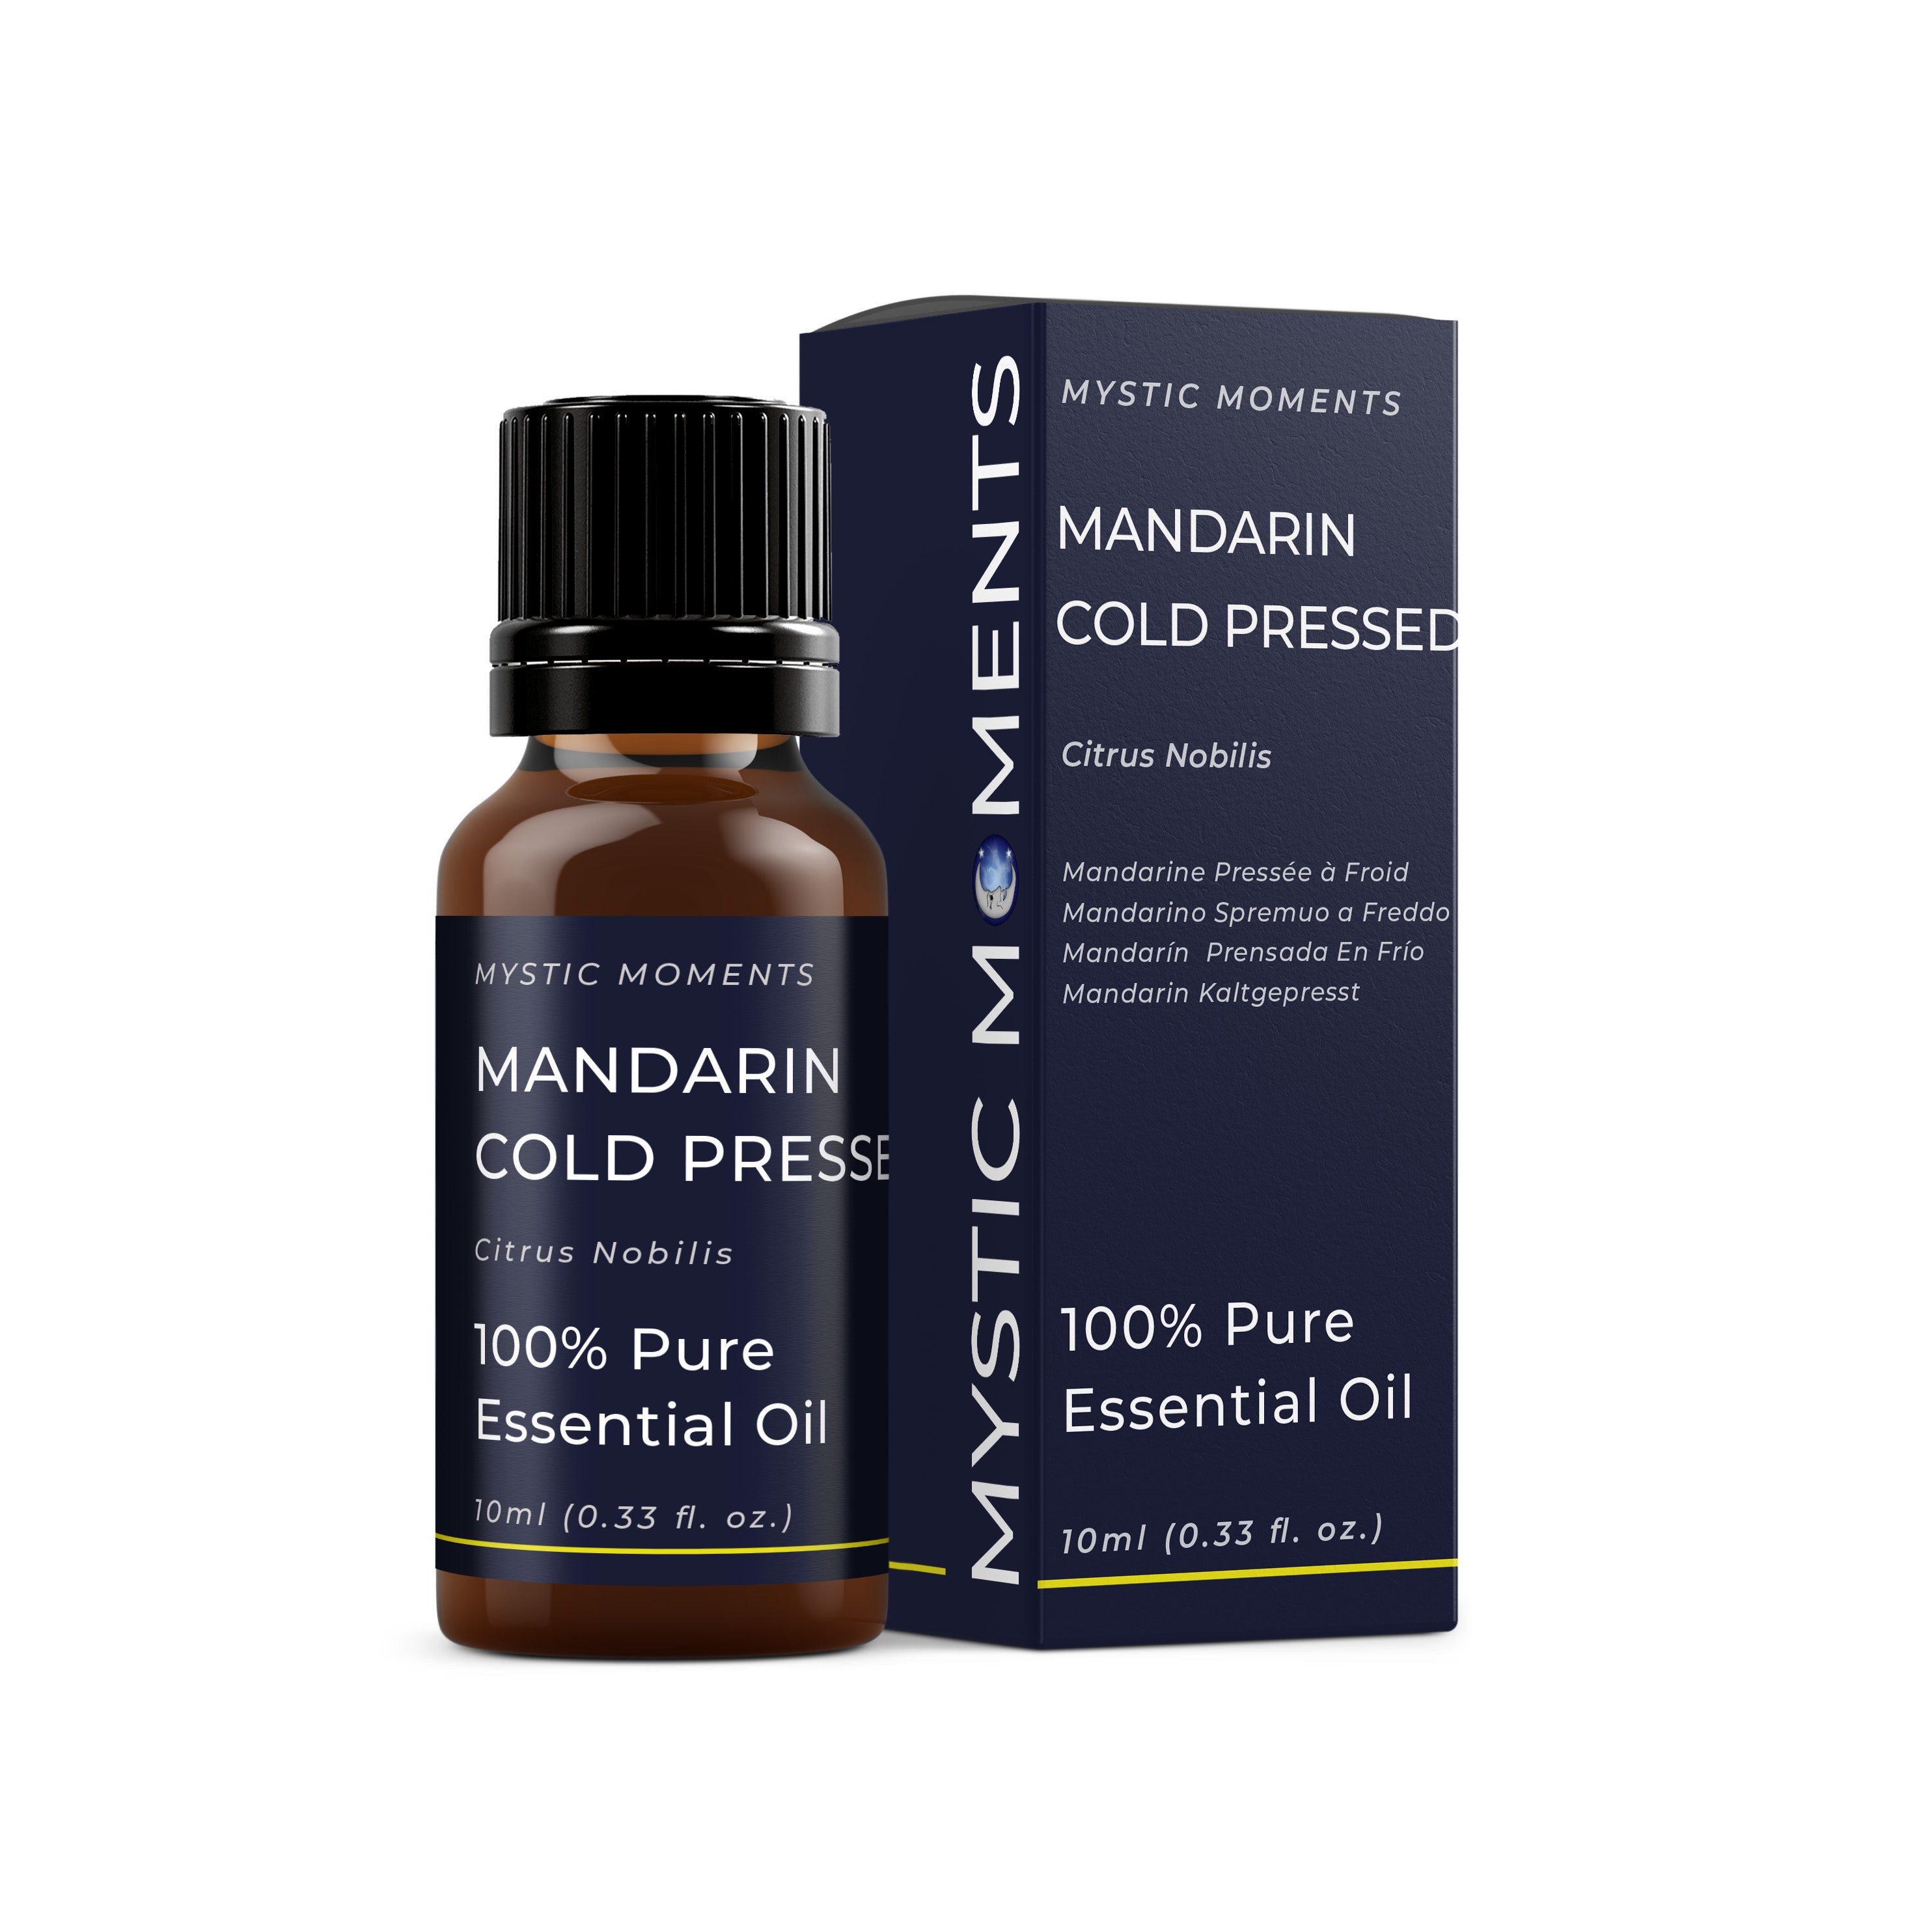 Mandarin Cold Pressed Essential Oil